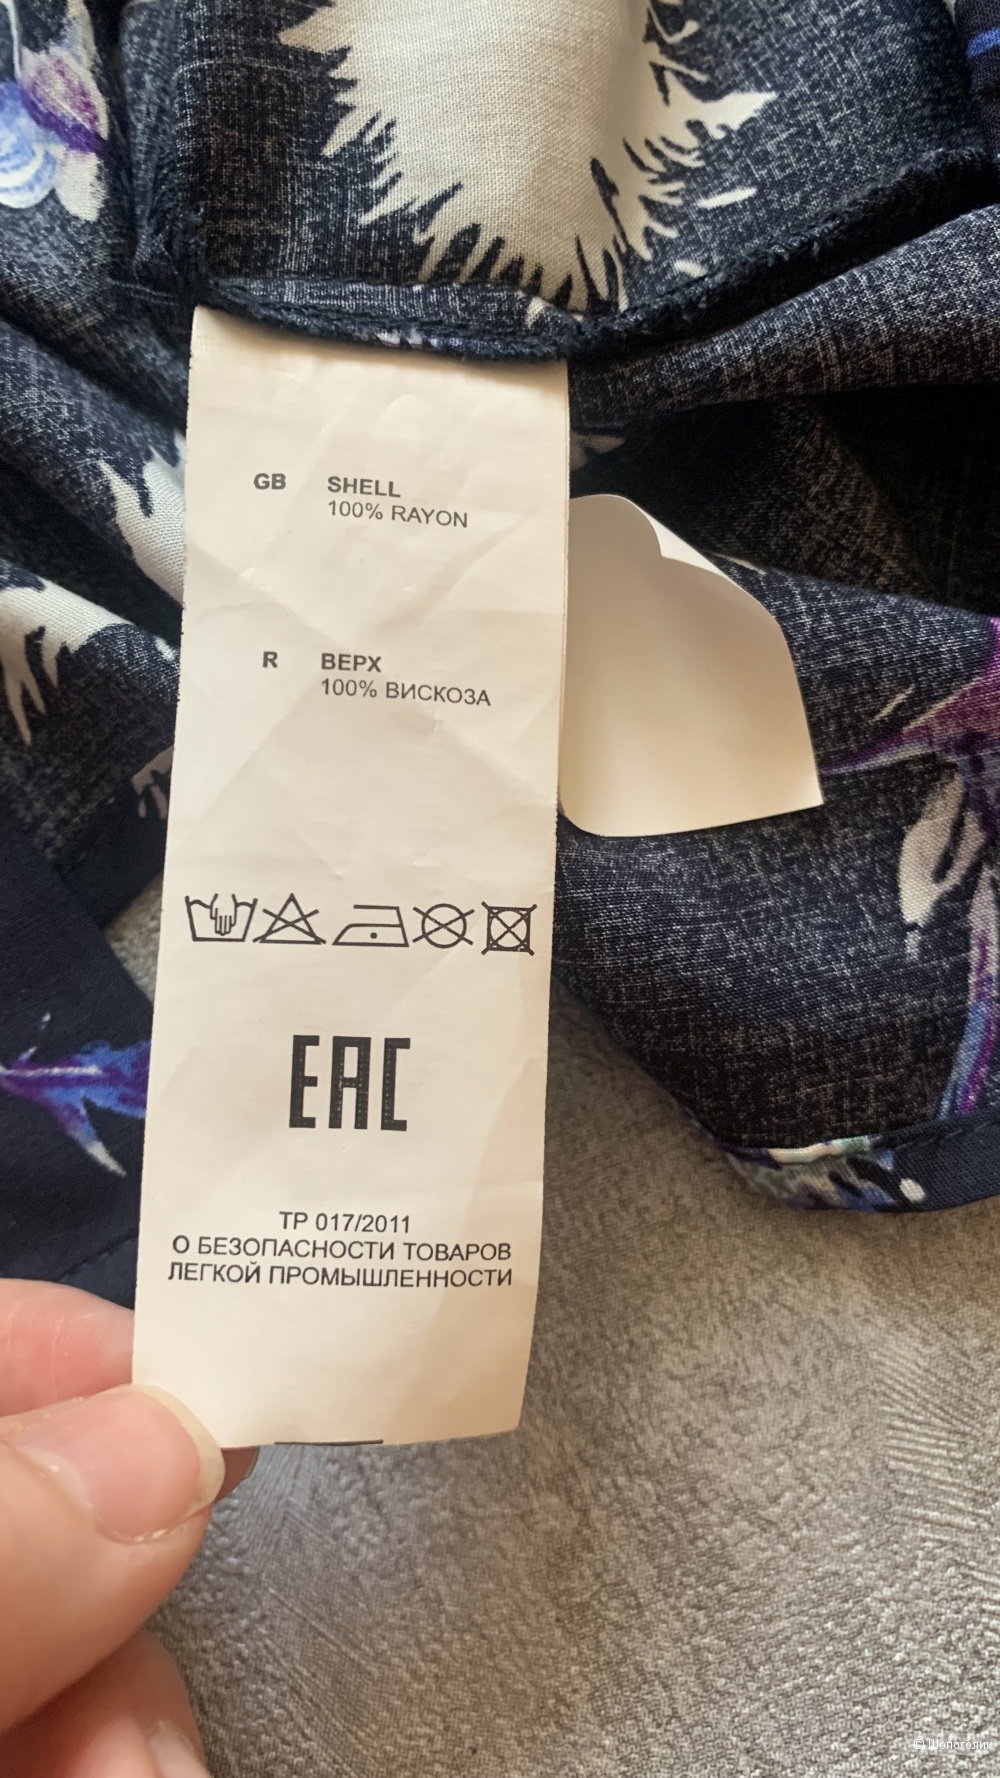 Рубашка / блузка BAON размер XXL (52)